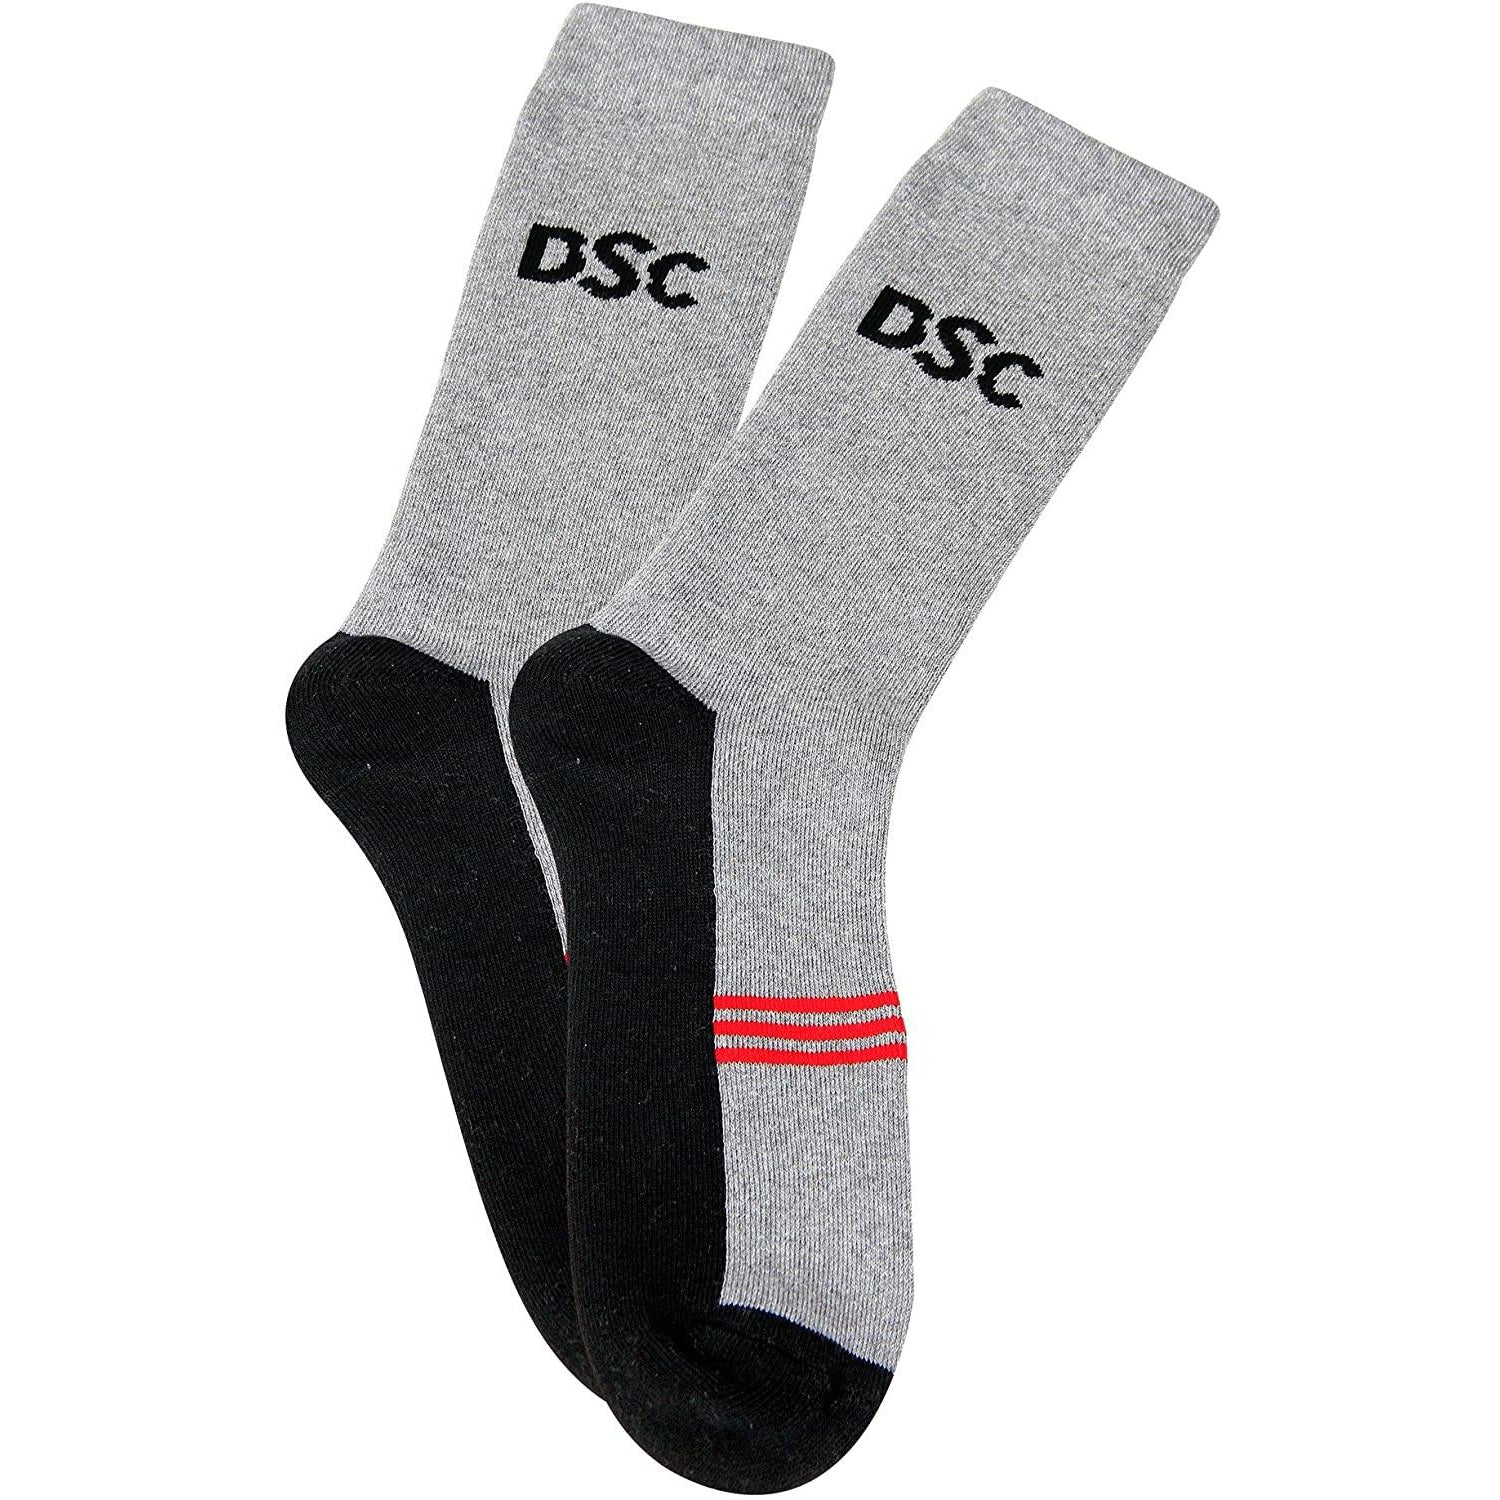 DSC Passion Cricket Socks - Grey/Black - Best Price online Prokicksports.com